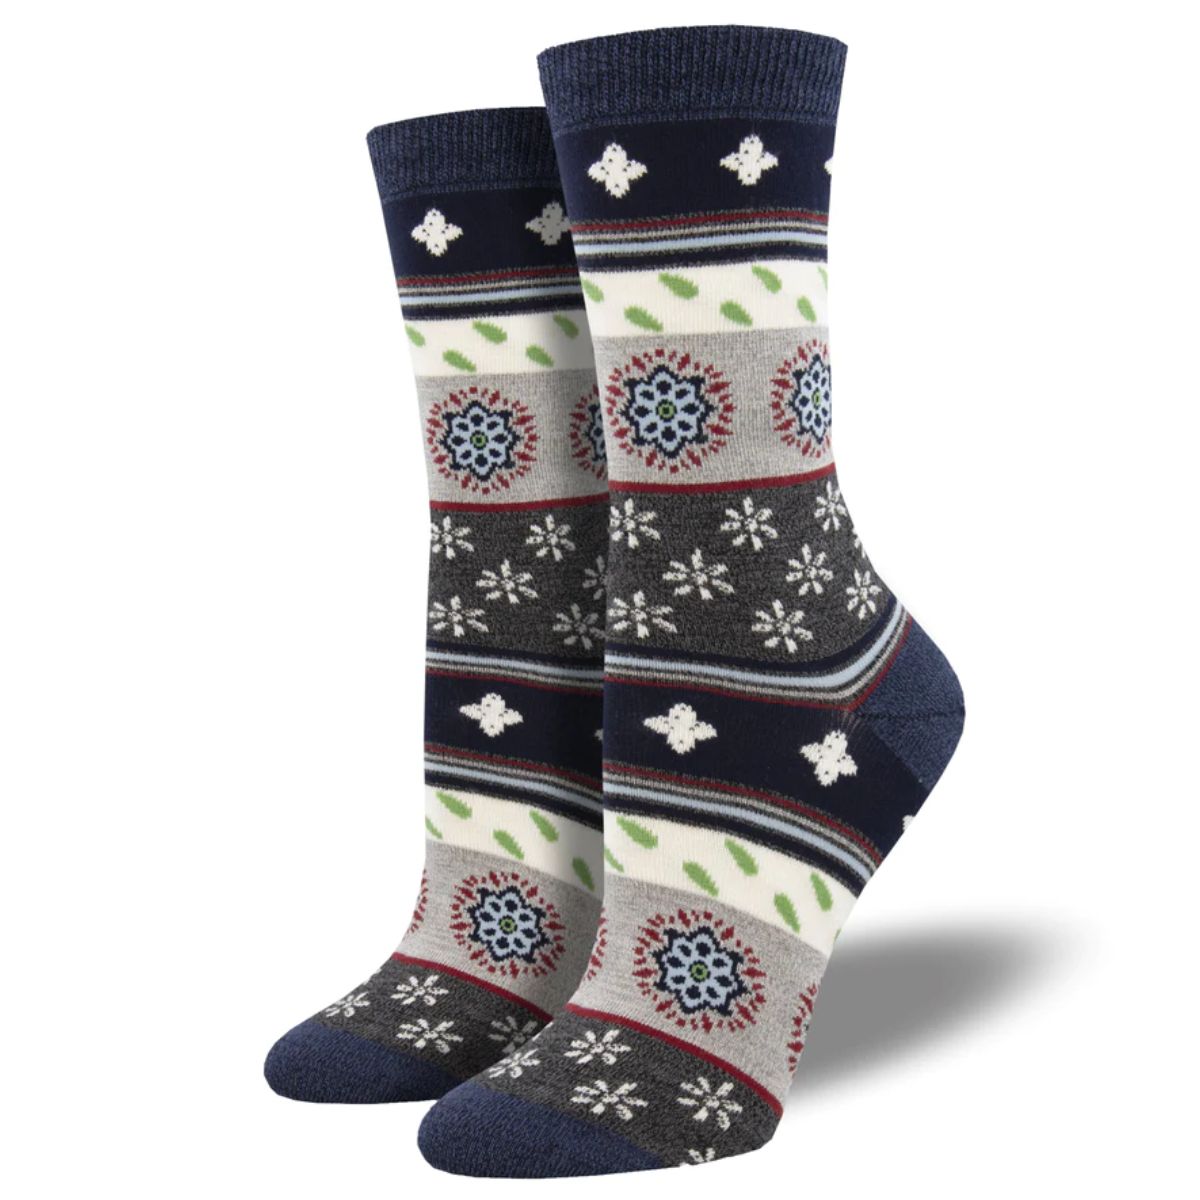 Marrakesh motif socks a pair of black crew socks with Marrakesh inspired print